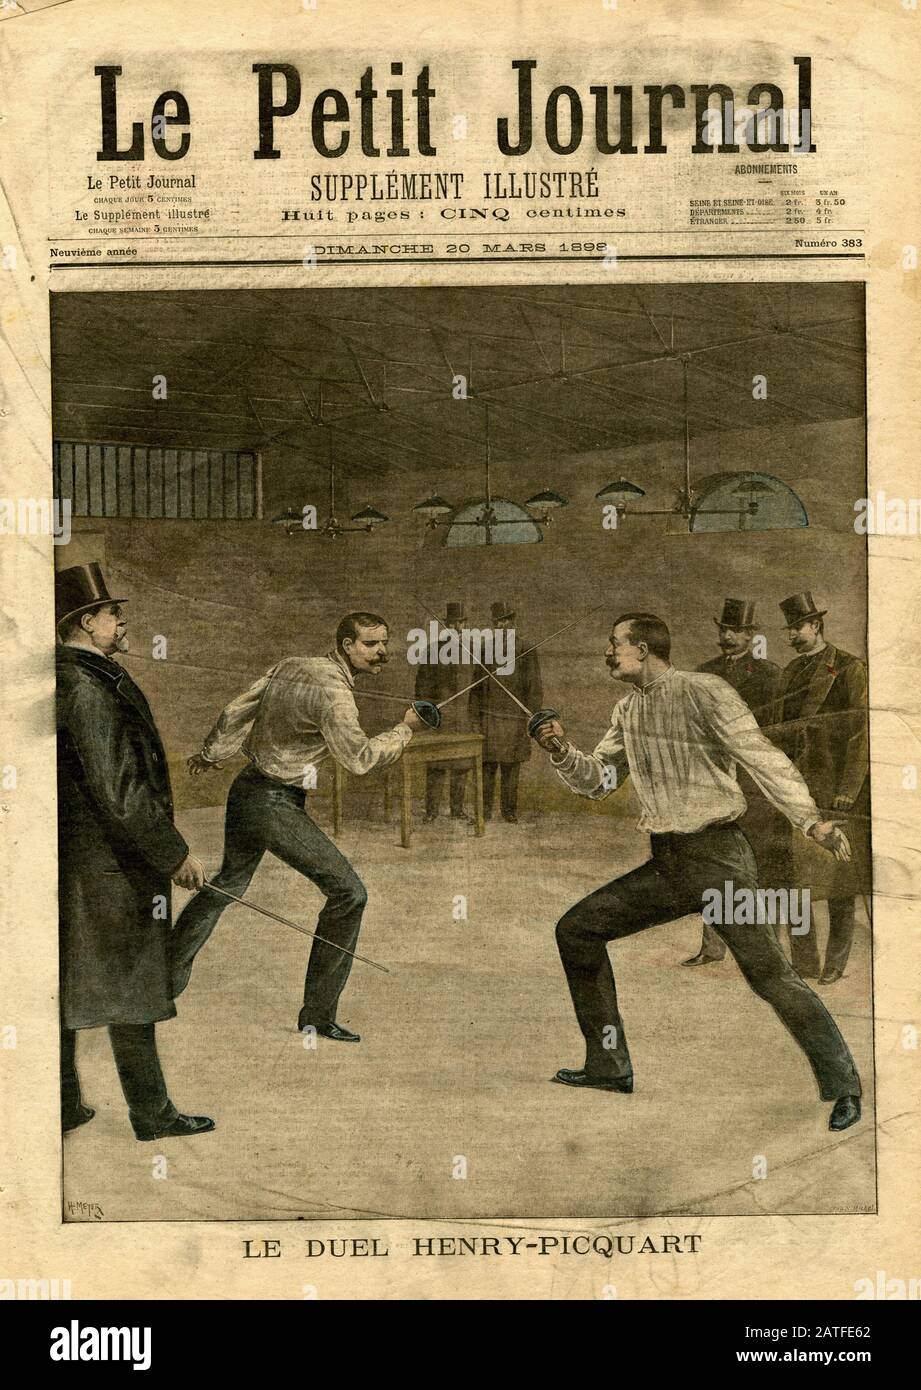 Le duello Henry - Picquart - l'affare Dreyfus 1894-1906 - Petit Journal 3/20/1898 - Francese giornale illustrato Foto Stock